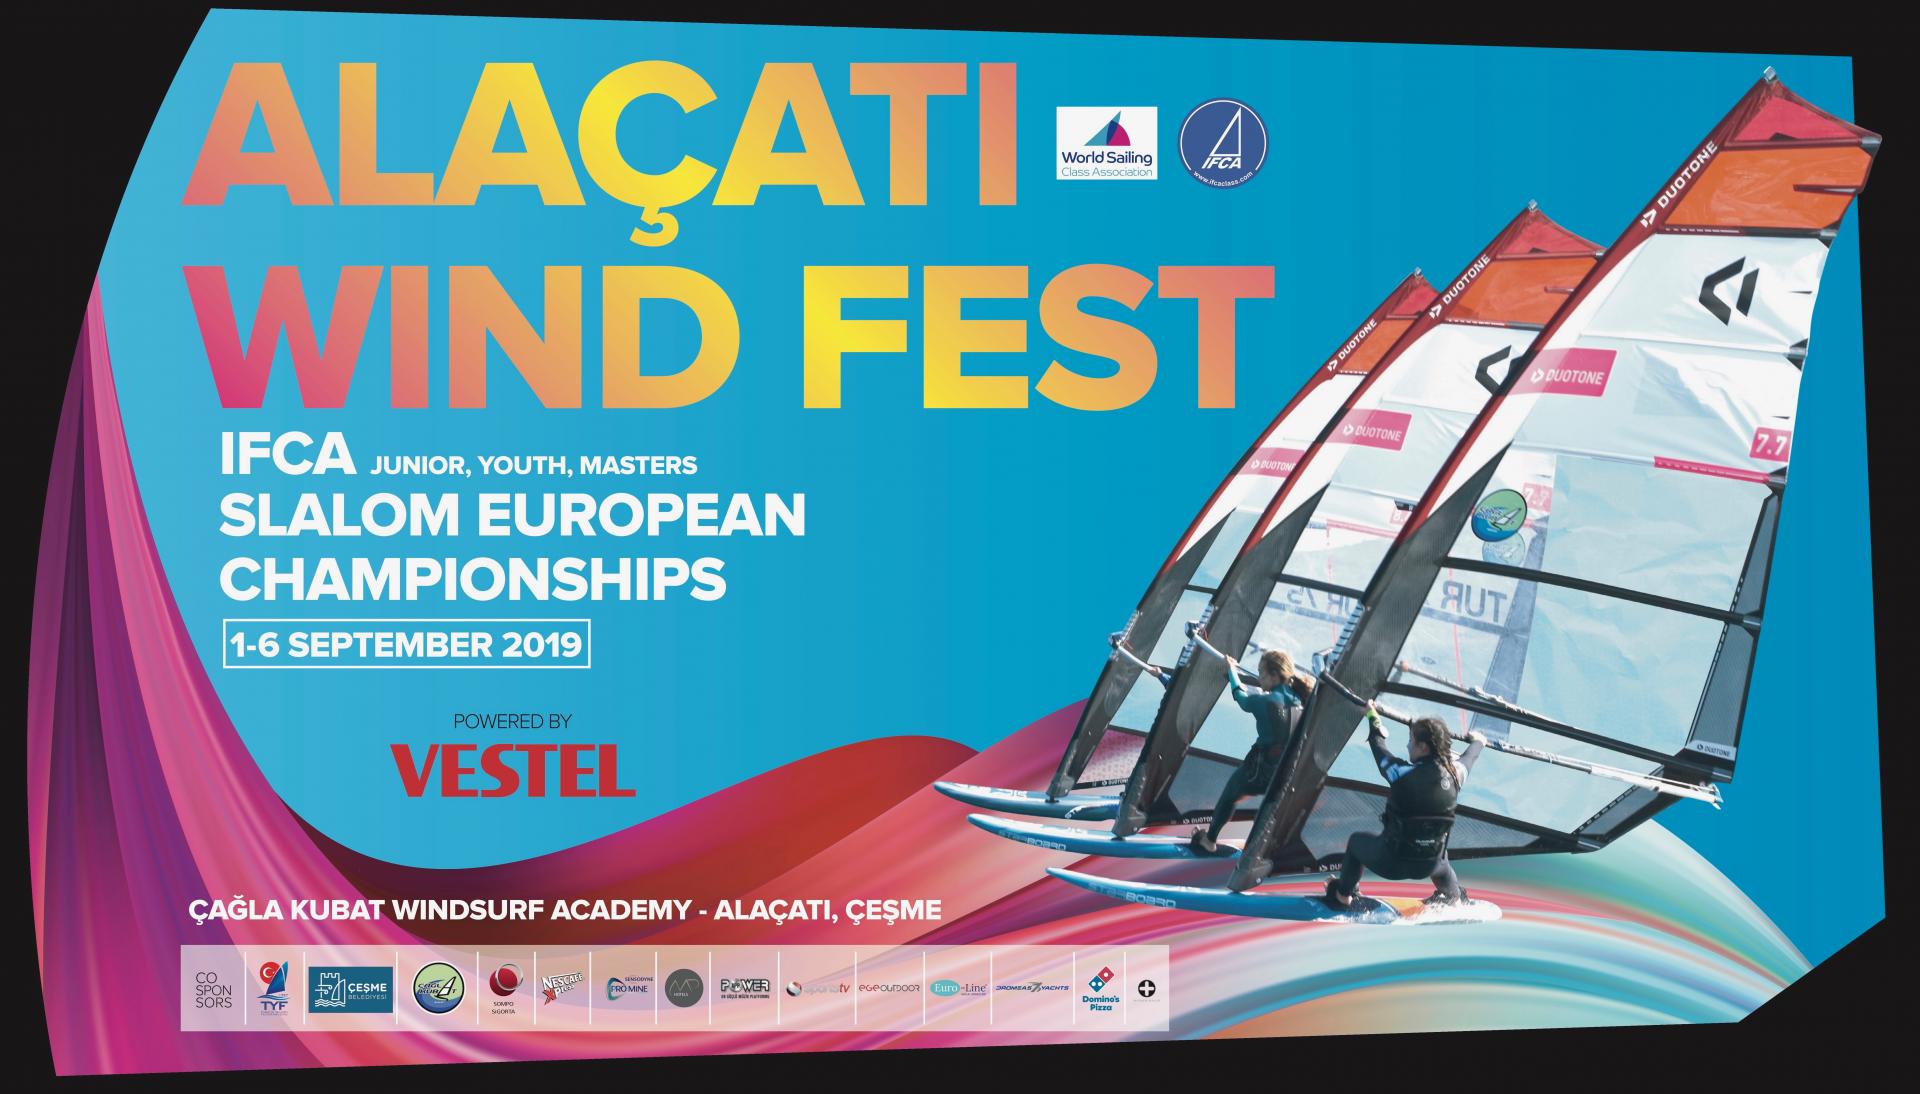 Alacati Wind Fest: 2019 IFCA JYM Slalom European Championships